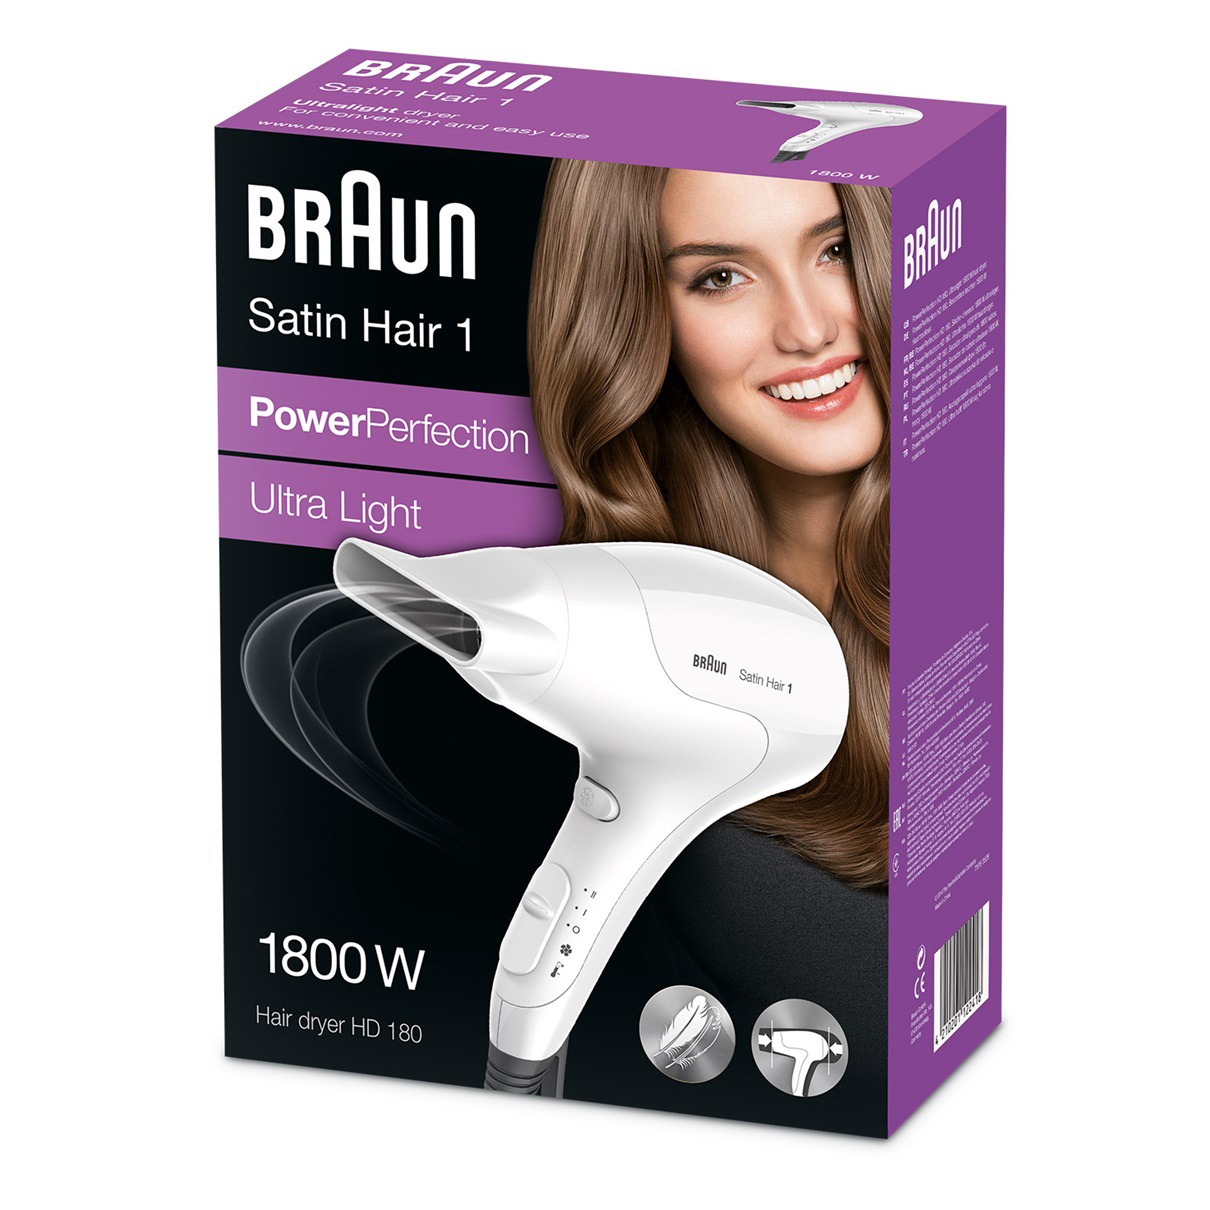 Braun | Haartrockner Satin Hair 1 PowerPerfection | 1800 Watt